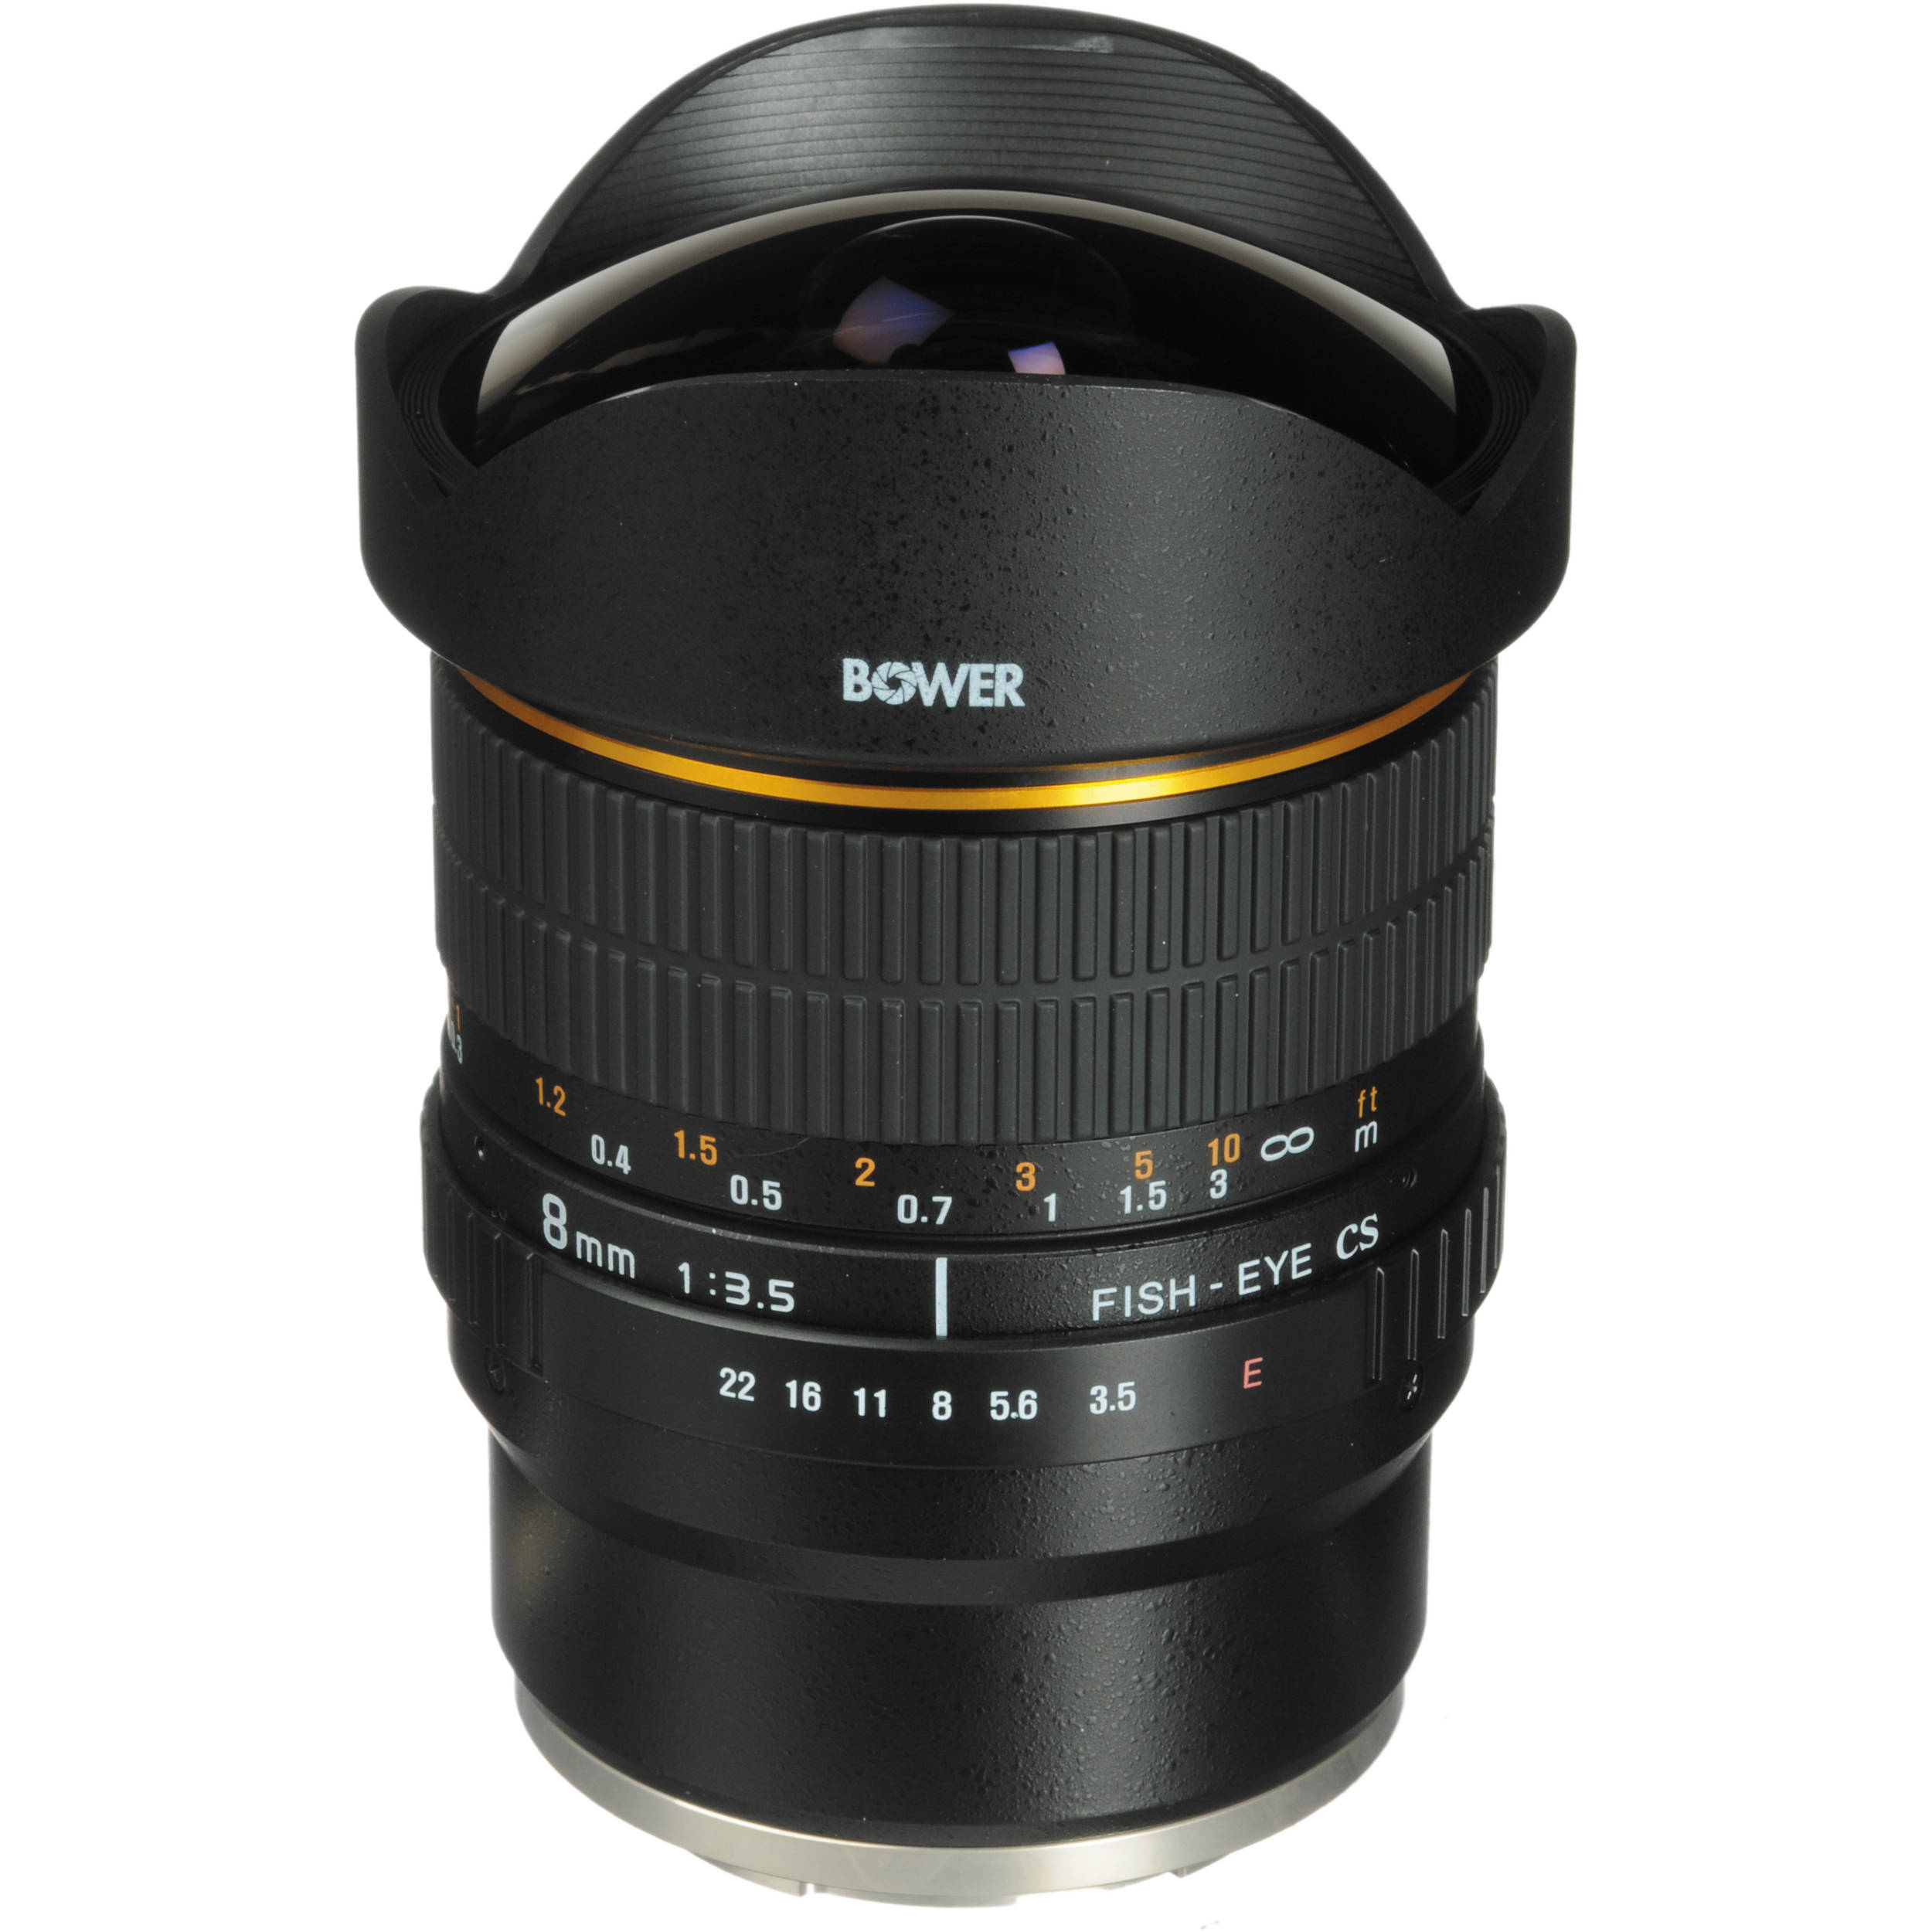 Bower 8mm f/3.5 Super Wide Angle Fisheye Lens for Sony Emount